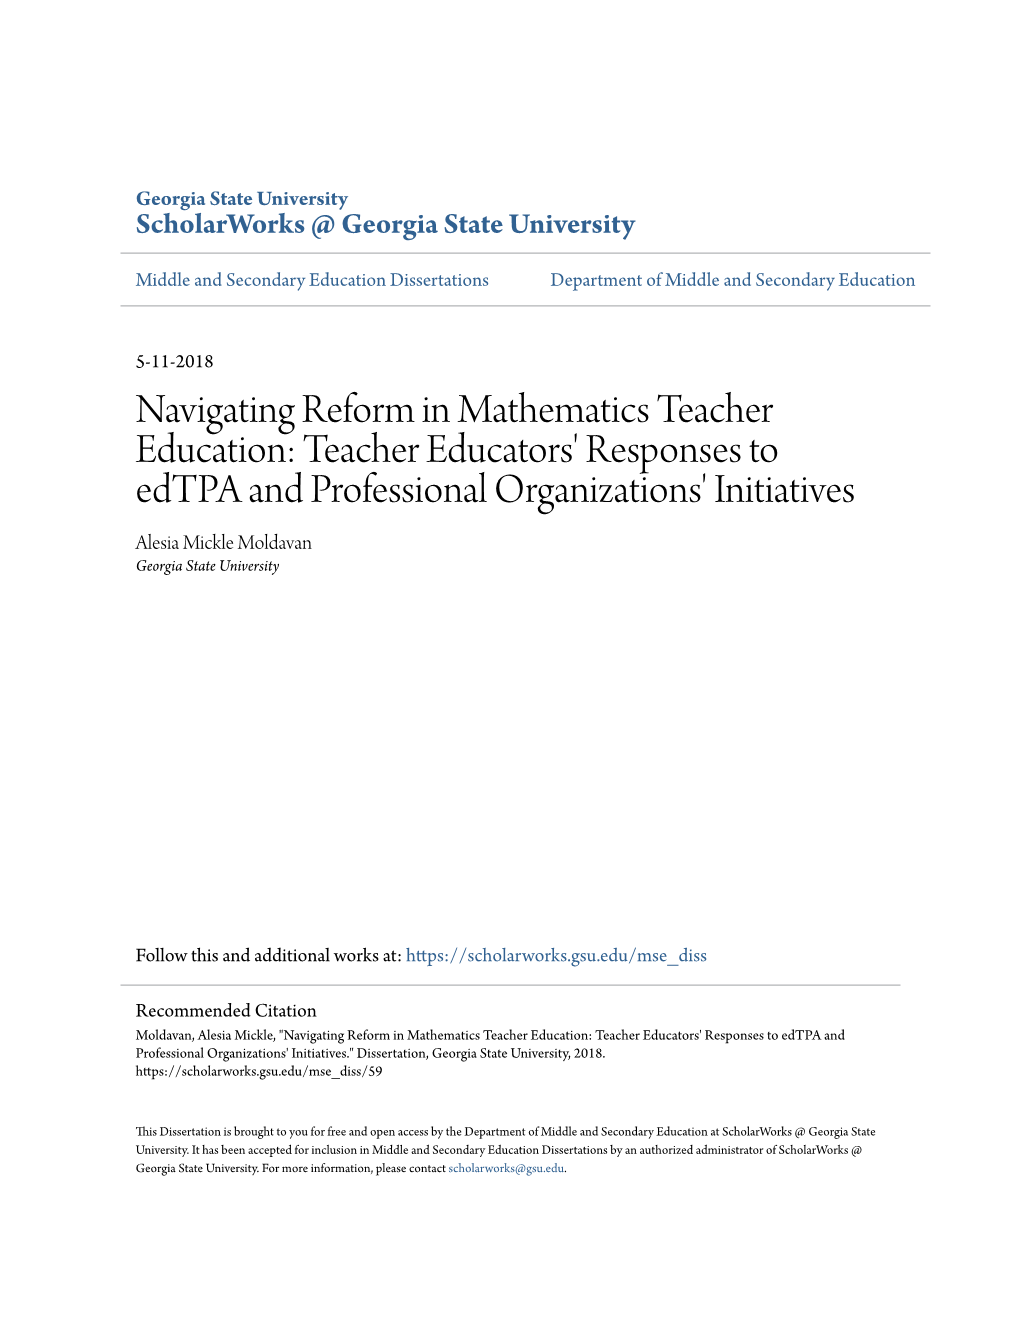 Navigating Reform in Mathematics Teacher Education